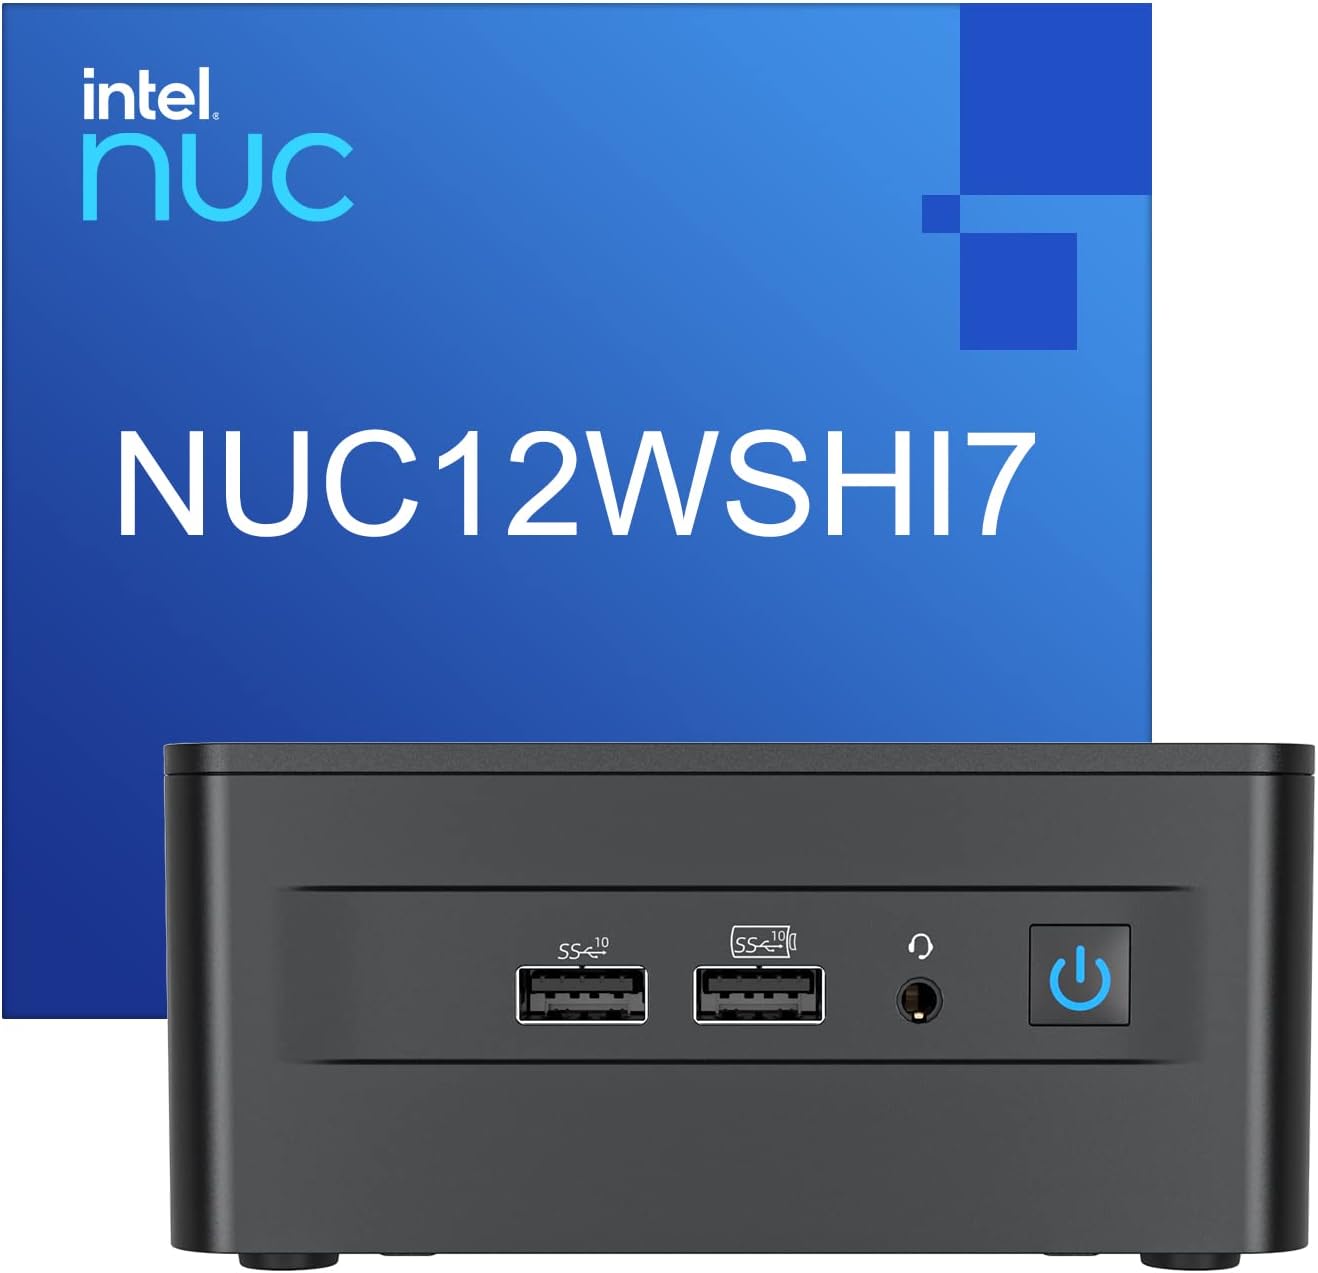 Intel NUC 12 Pro Wall Street Canyon NUC12WSHi7 Mini PC, Latest 12TH Gen Intel Core i7-1260P 12-Cores, 16 Threads, 18MB Cache, Upto 4.7GHz Turbo,Intel Iris Xe Graphics, 16GB RAM, 512GB SSD, Win 11 Pro